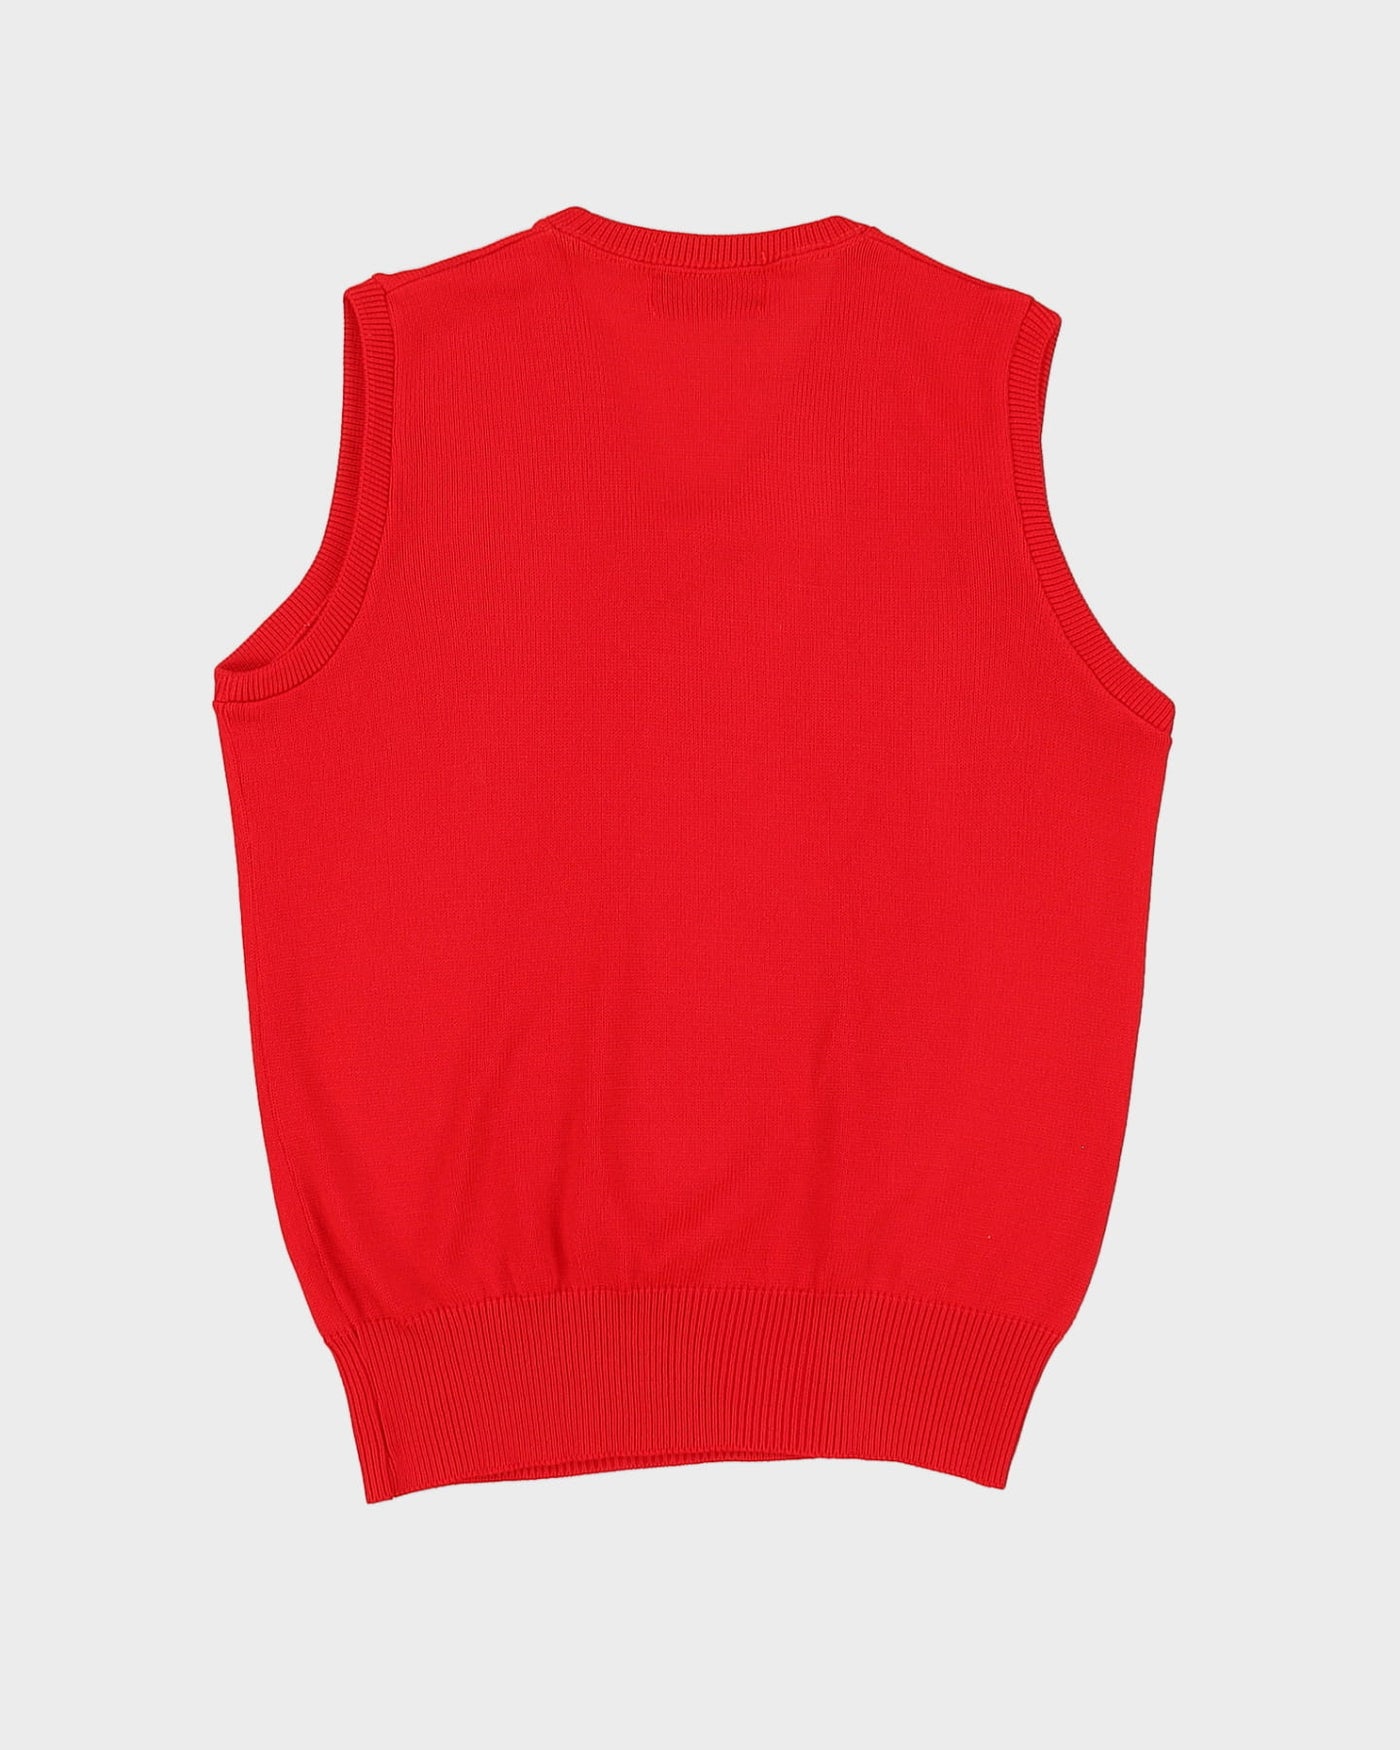 Vintage 80s Red Sleeveless Tank Knit / Sweater Vest - M